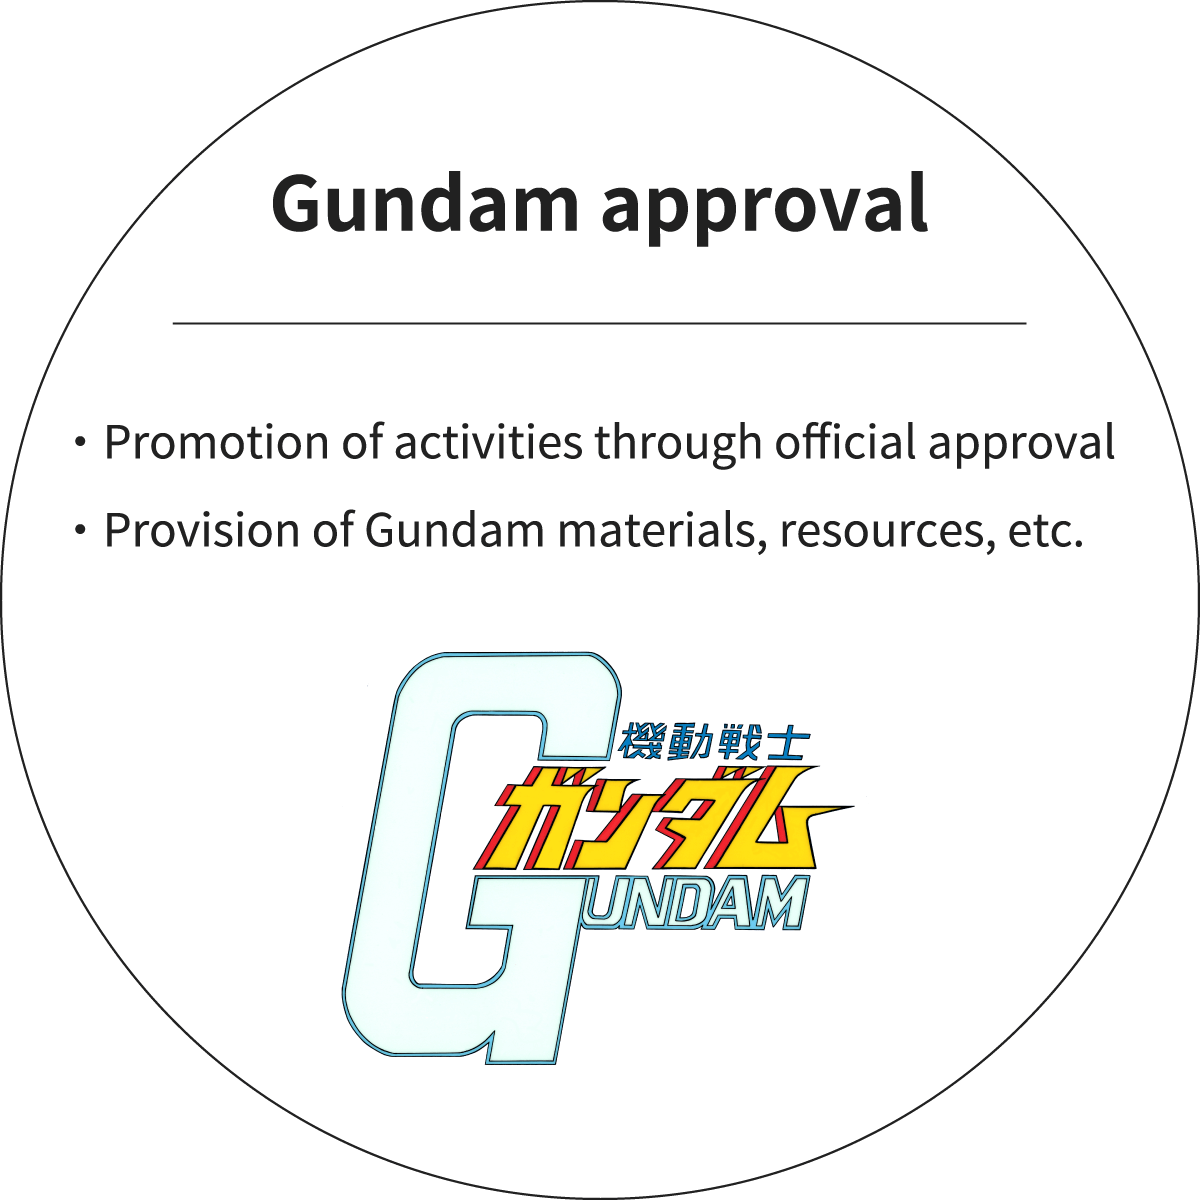 Gundam approval